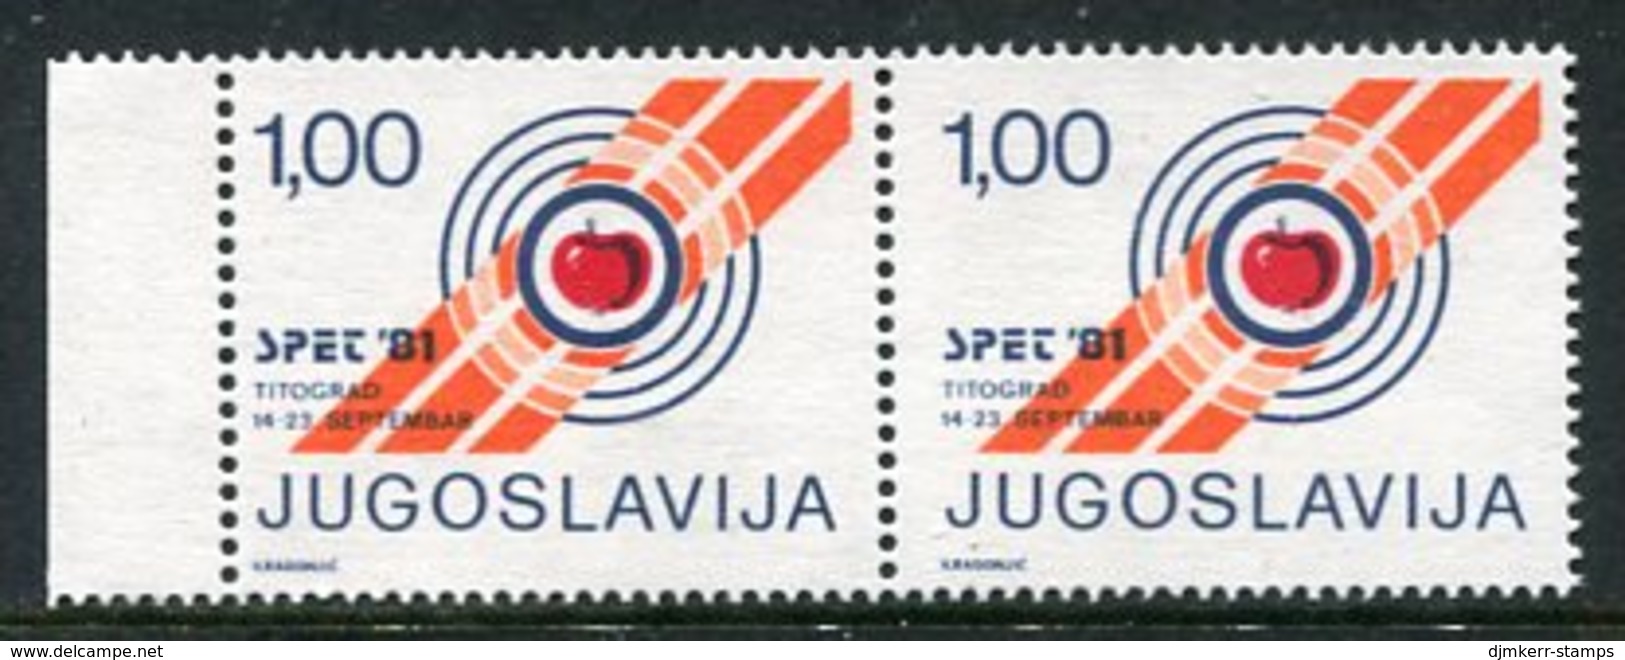 YUGOSLAVIA 1981 SPET '81 European Shooting Championship Tax Stamp, Marginal Pair With Variety MNH / ** - Beneficiencia (Sellos De)